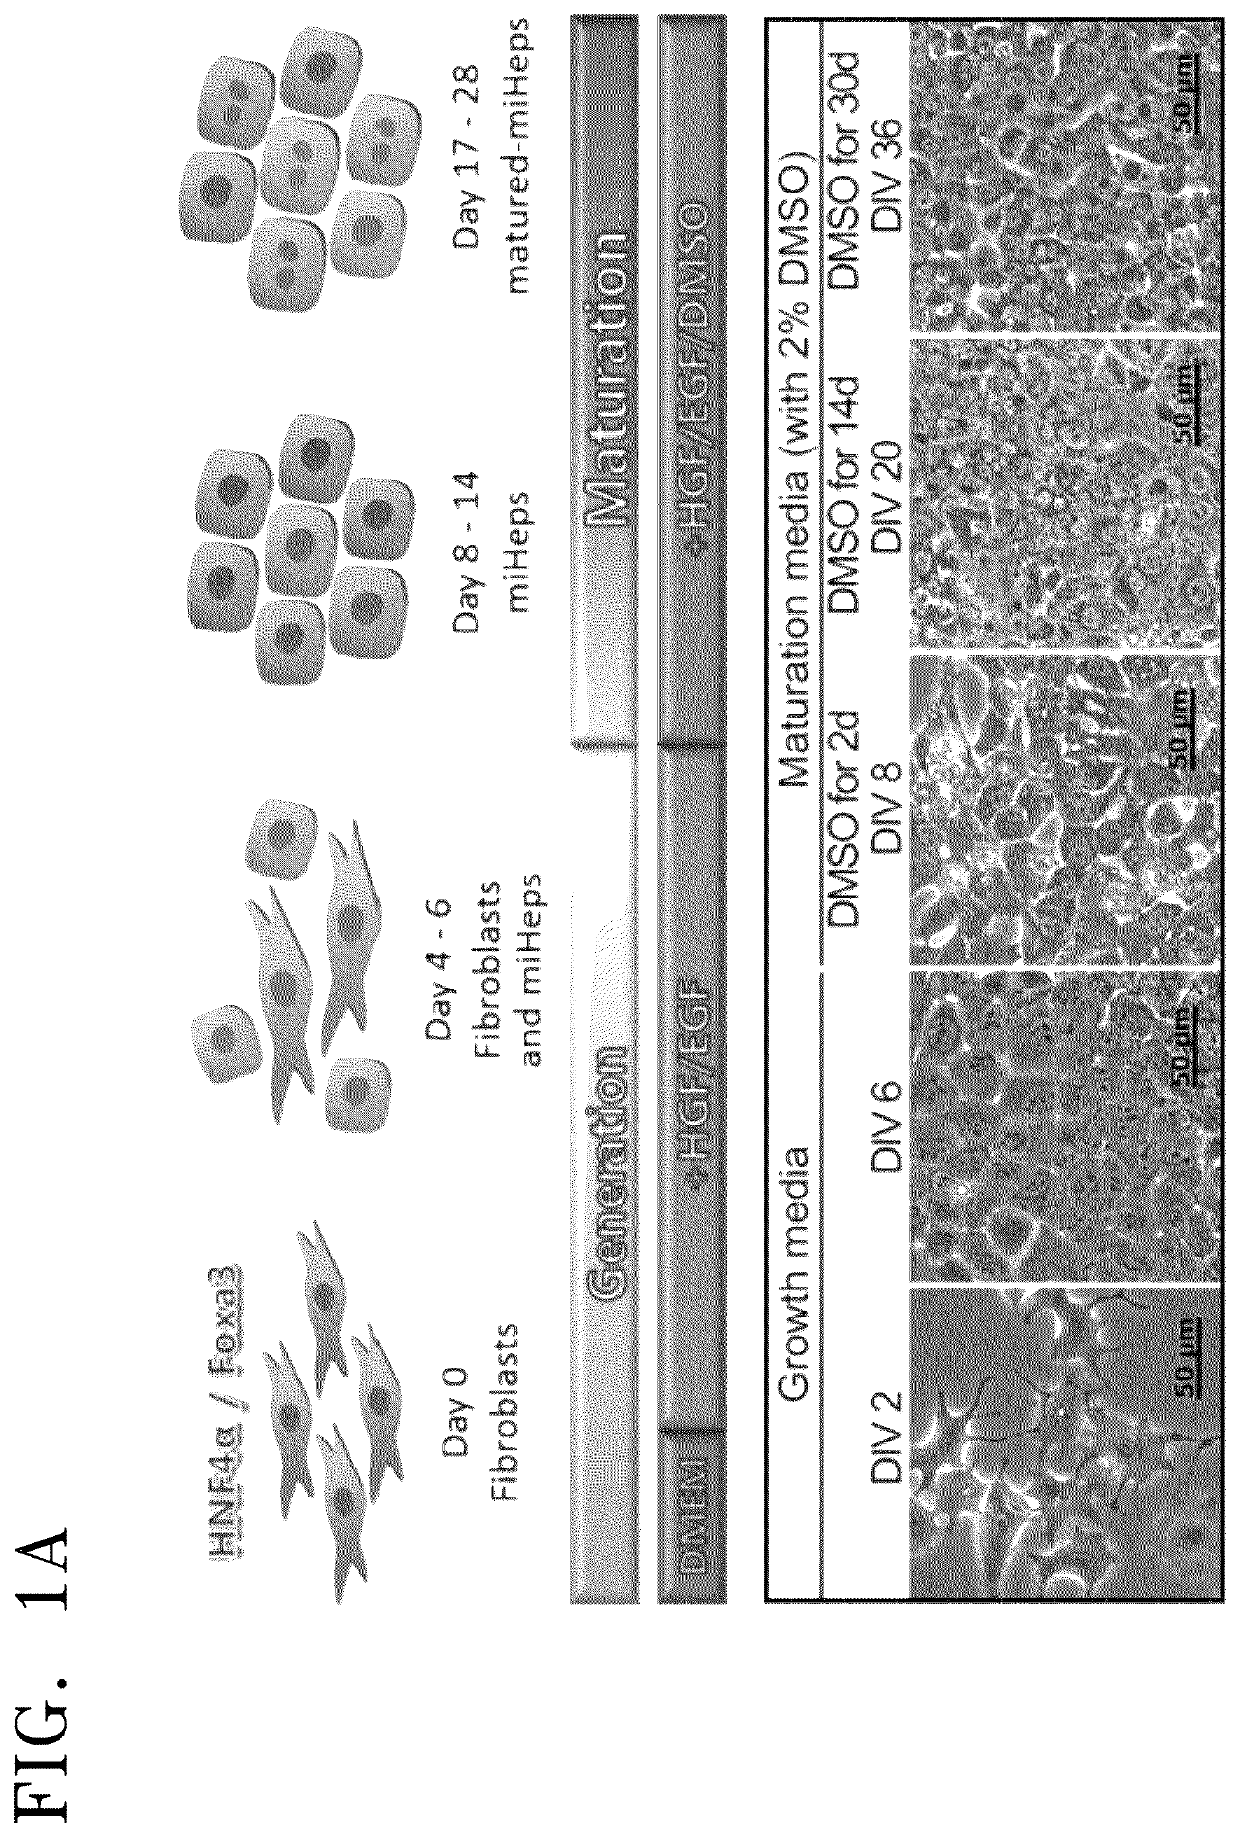 Method of preparing three-dimensional cell spheroid including adipose-derived stem cells and hepatocytes